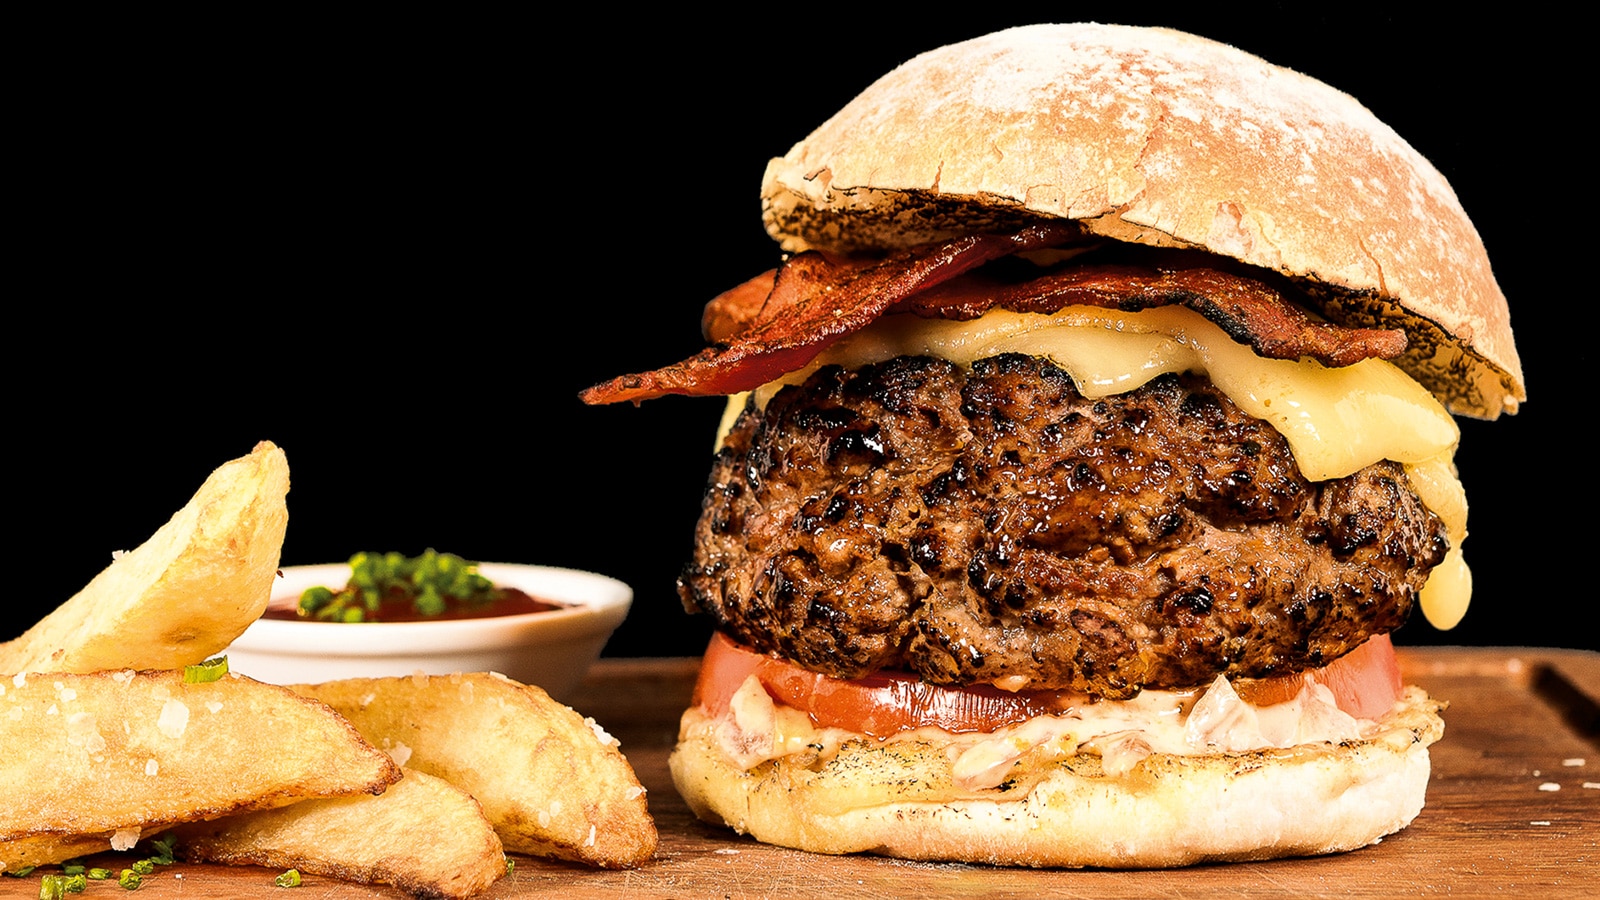 Tasty London Burgers - The 7 best